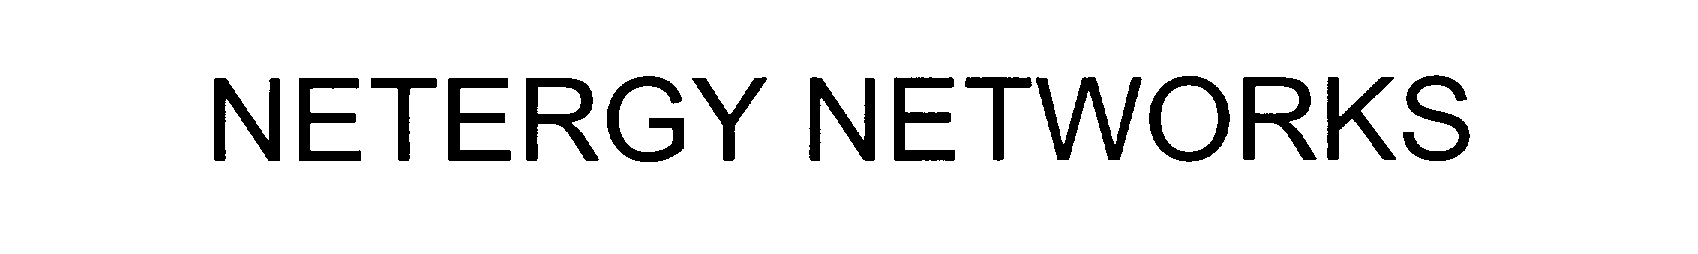  NETERGY NETWORKS